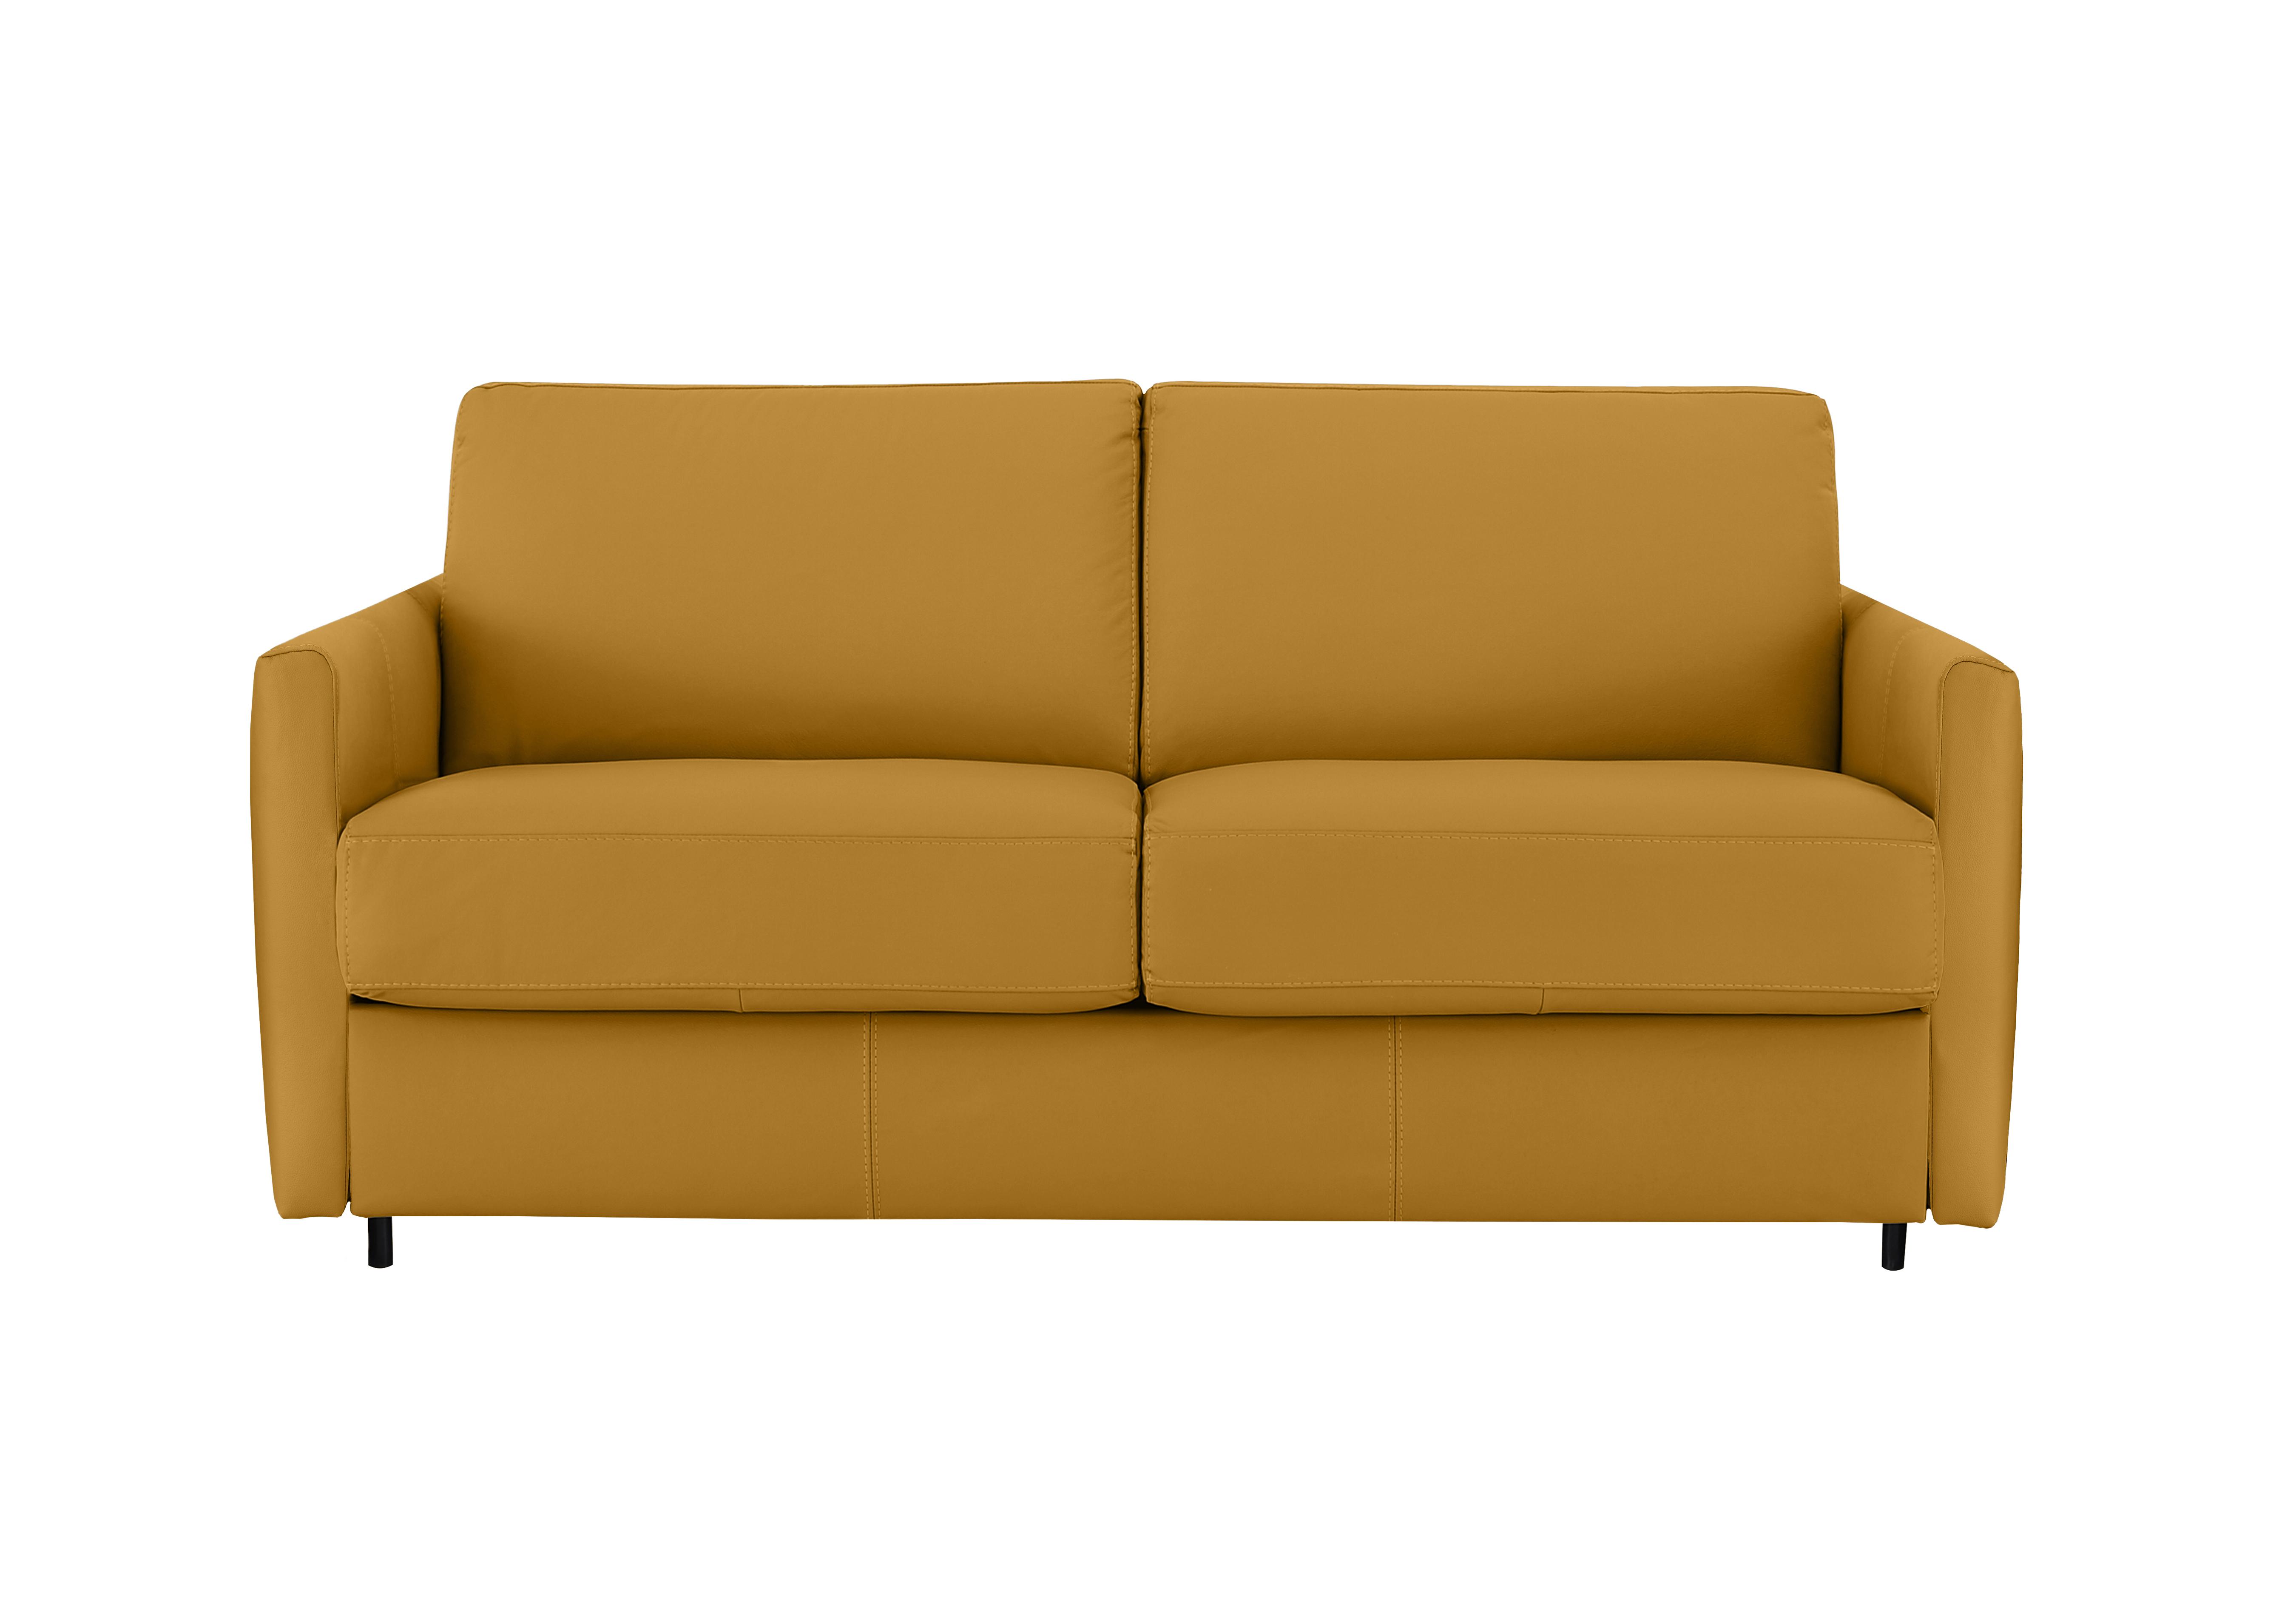 Alcova 2.5 Seater Leather Sofa Bed with Slim Arms in Torello Senape 355 on Furniture Village